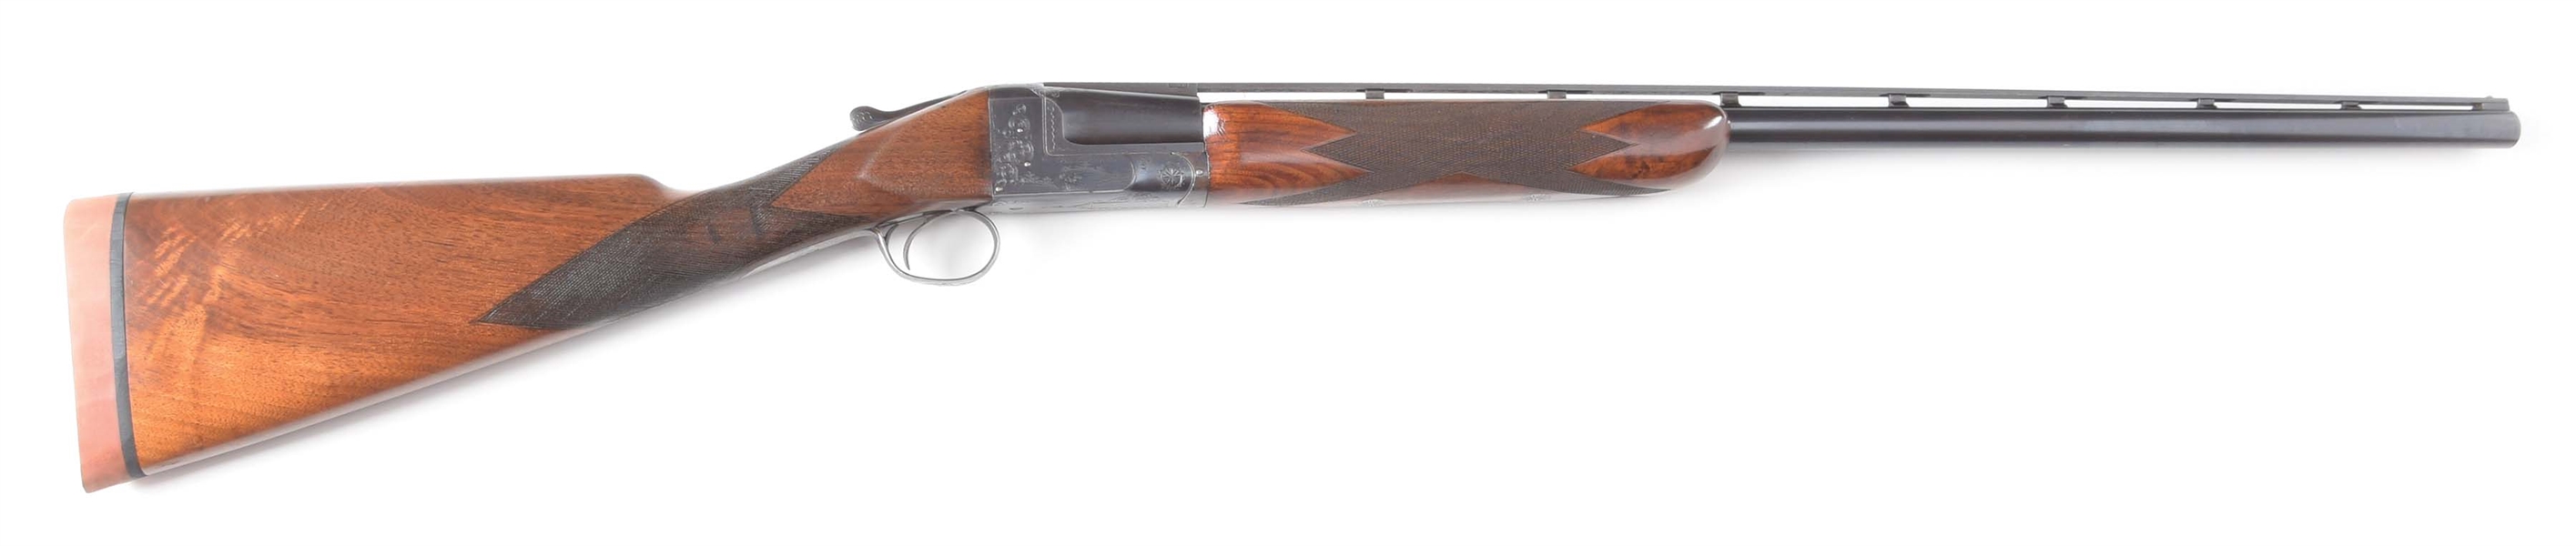 (C) BAKER GUN COMPANY STERLING GRADE SINGLE BARREL TRAP SHOTGUN.